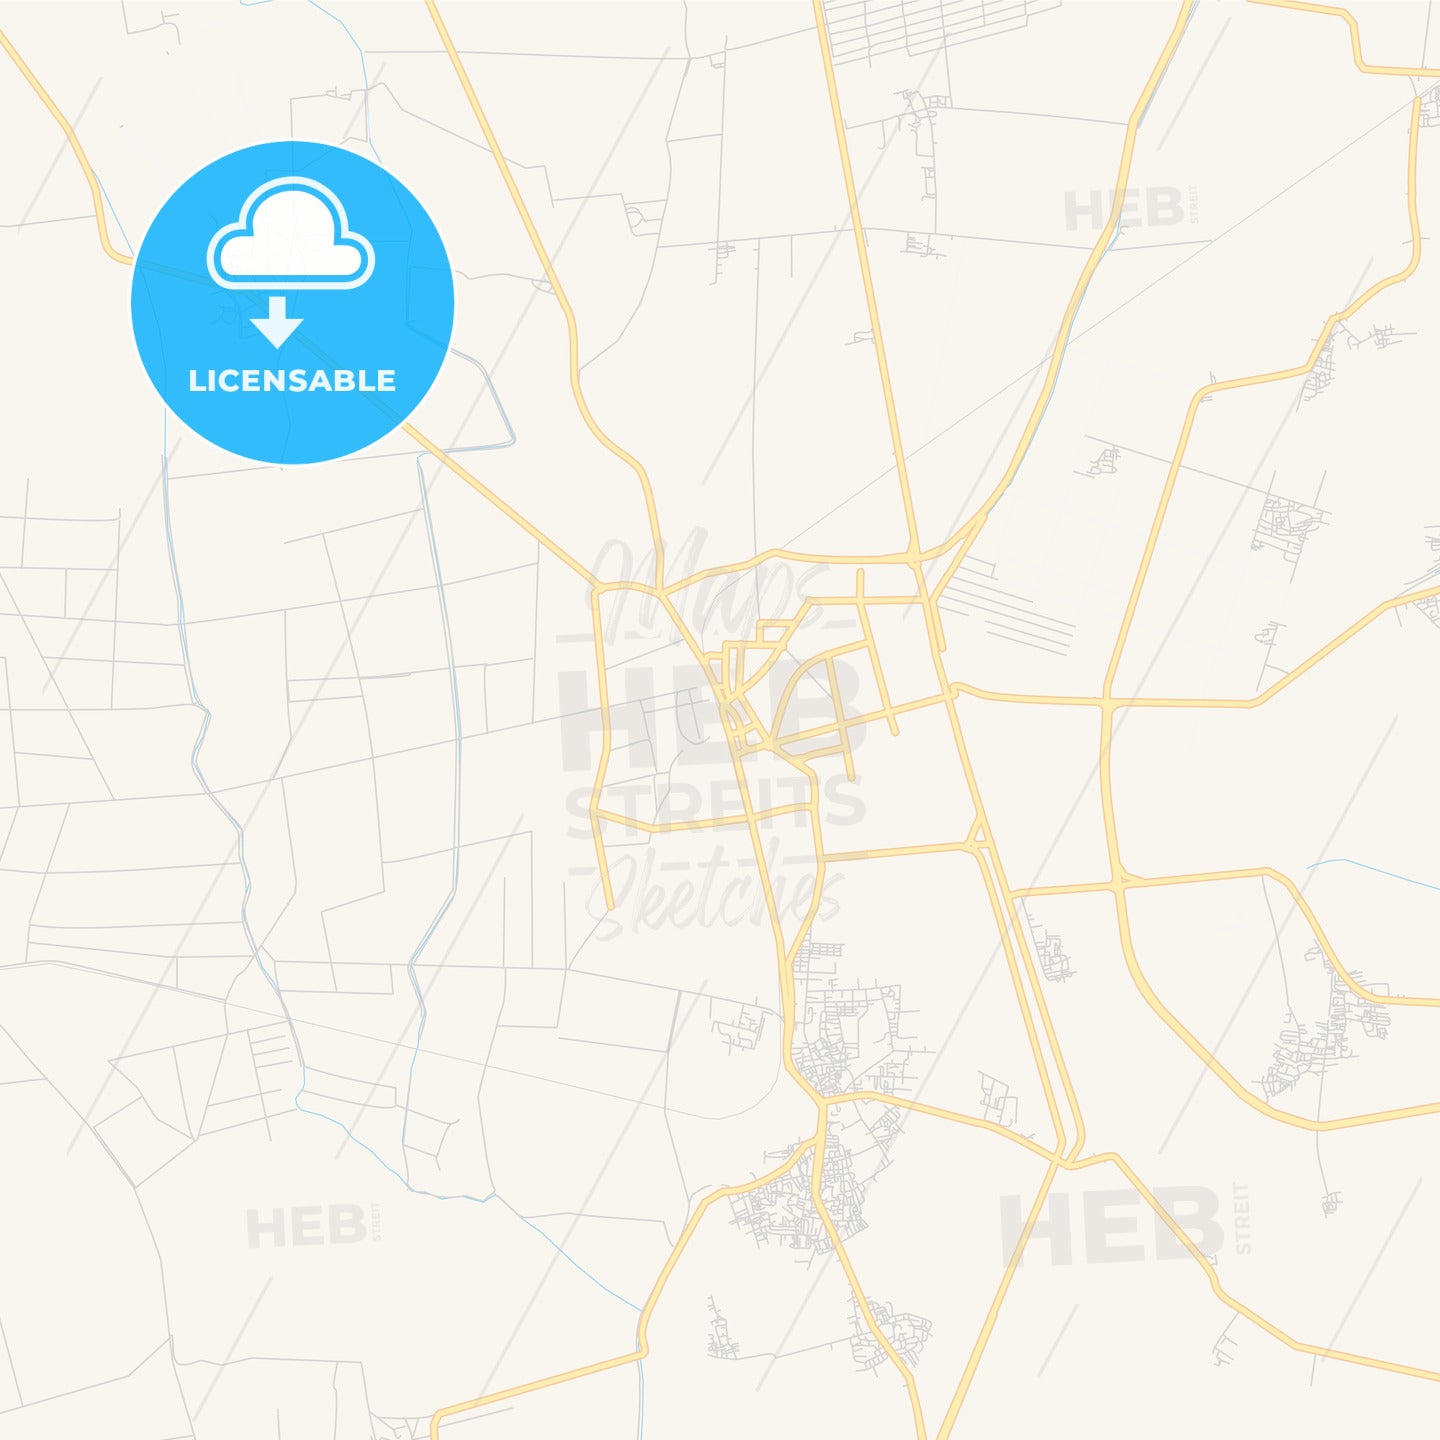 Printable street map of Kafr ash Shaykh, Egypt